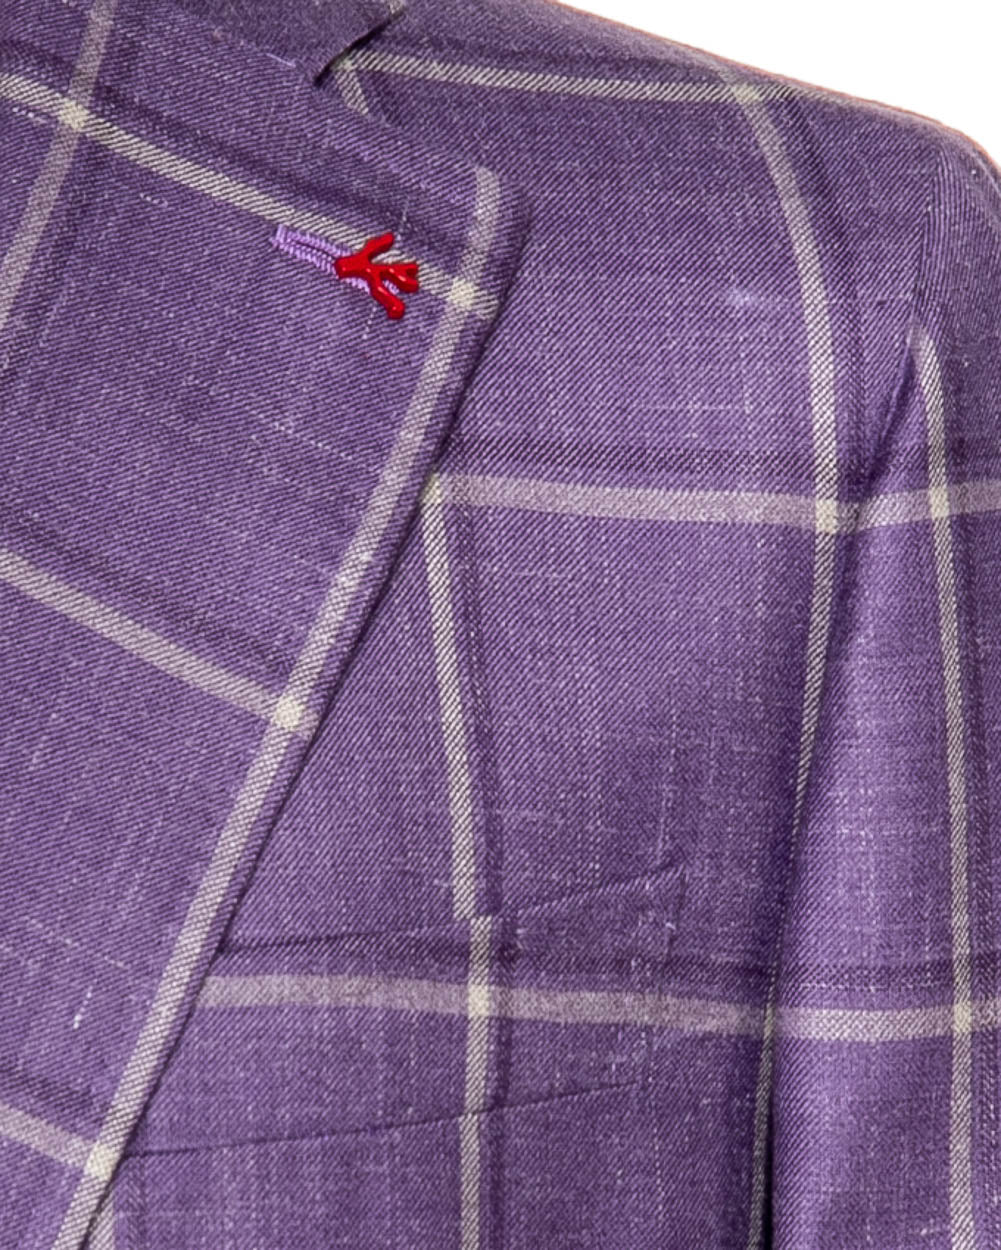 Purple with Cream Windowpane Sportcoat